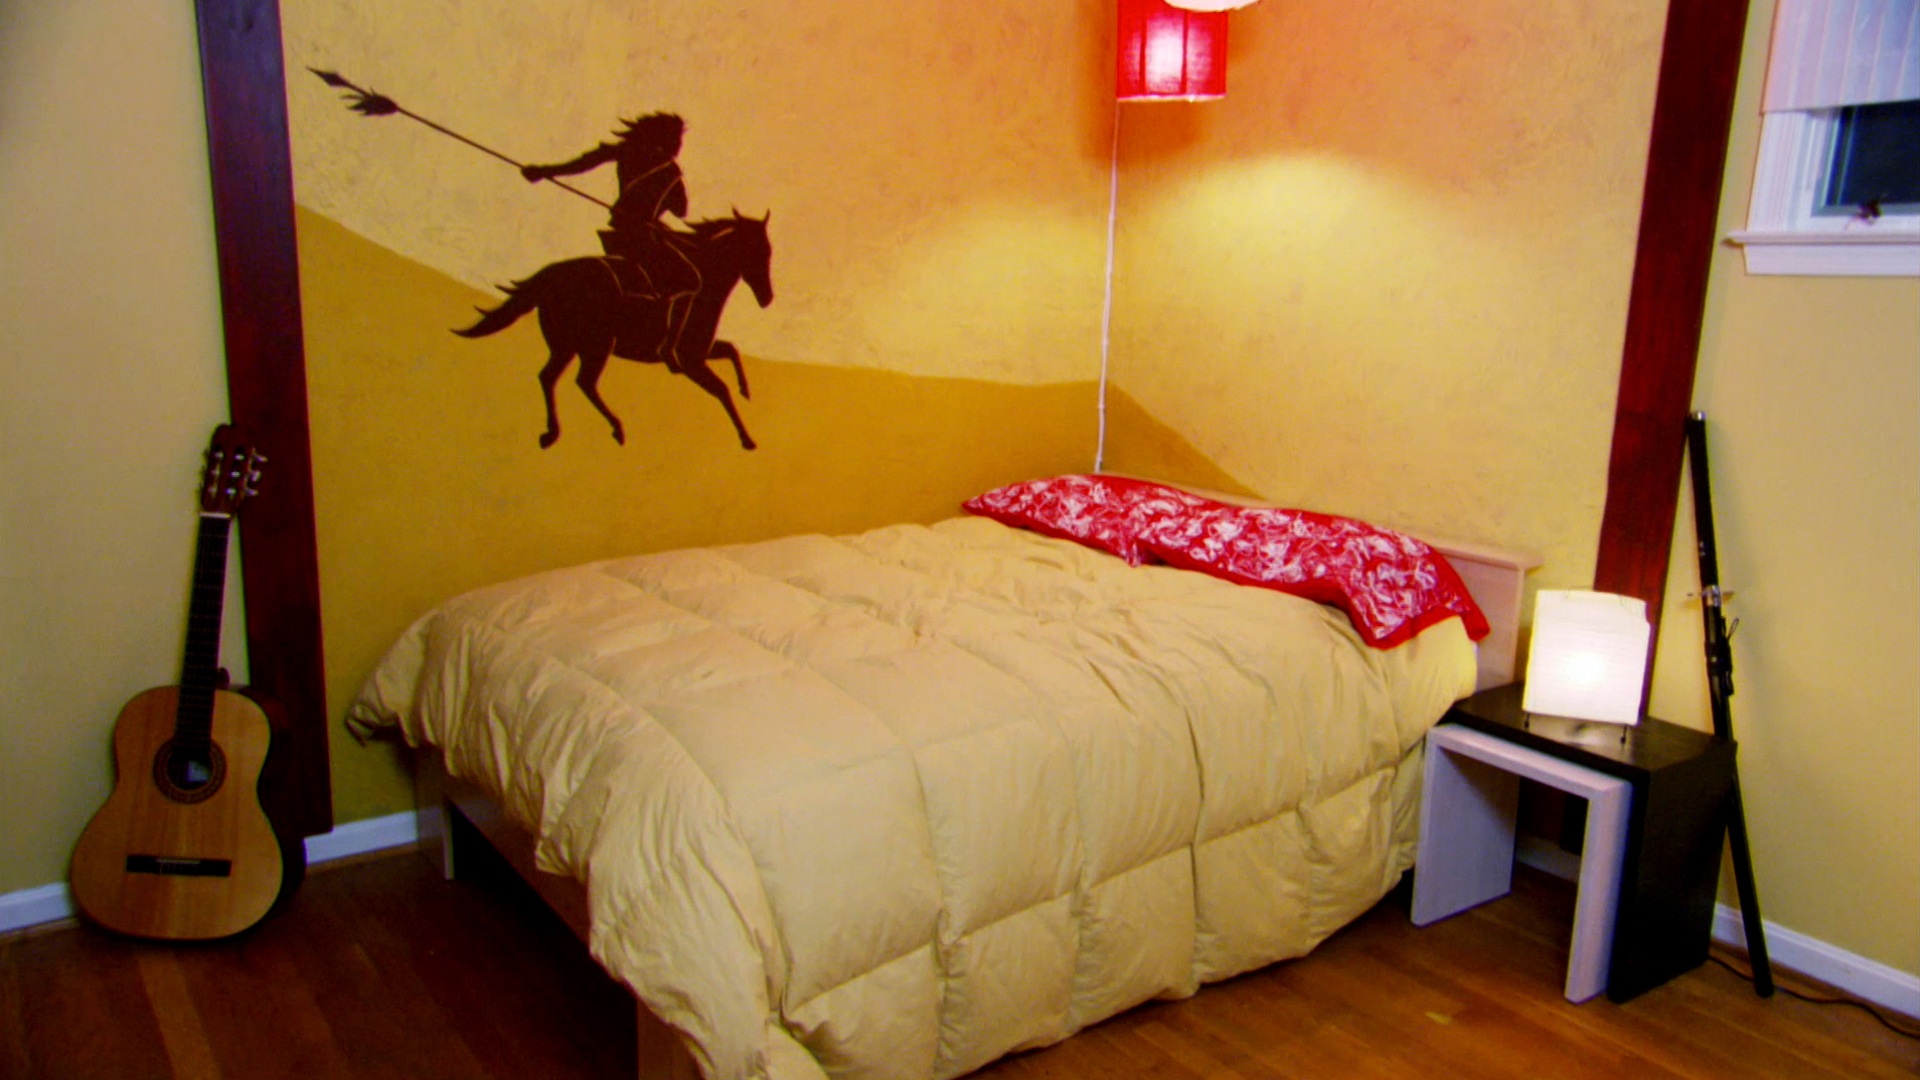 Bed Frame - HD Wallpaper 